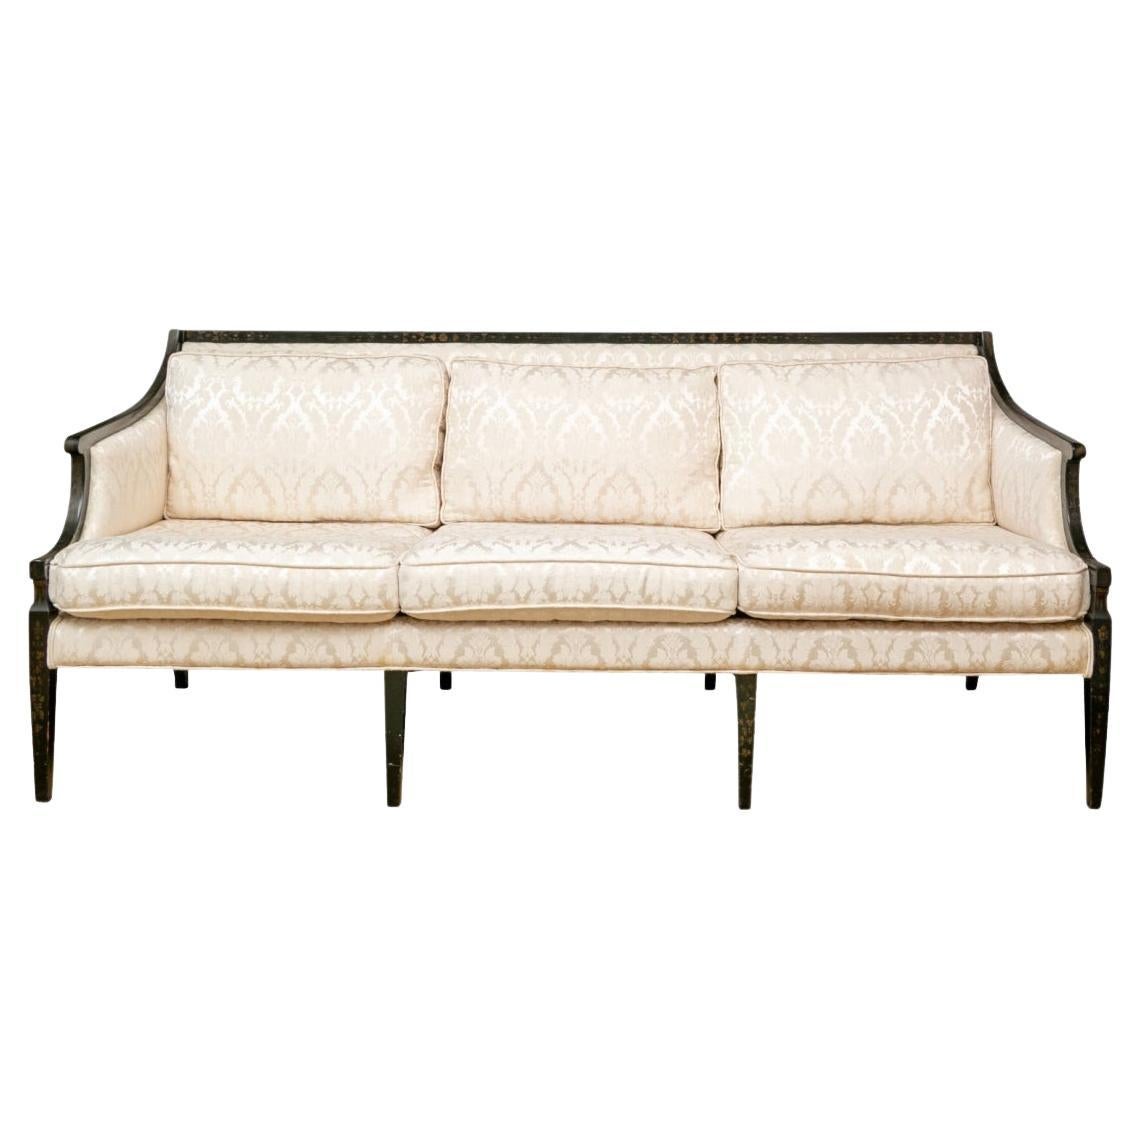 Vintage Hollywood Regency Style Jacquard Upholstered Sofa 